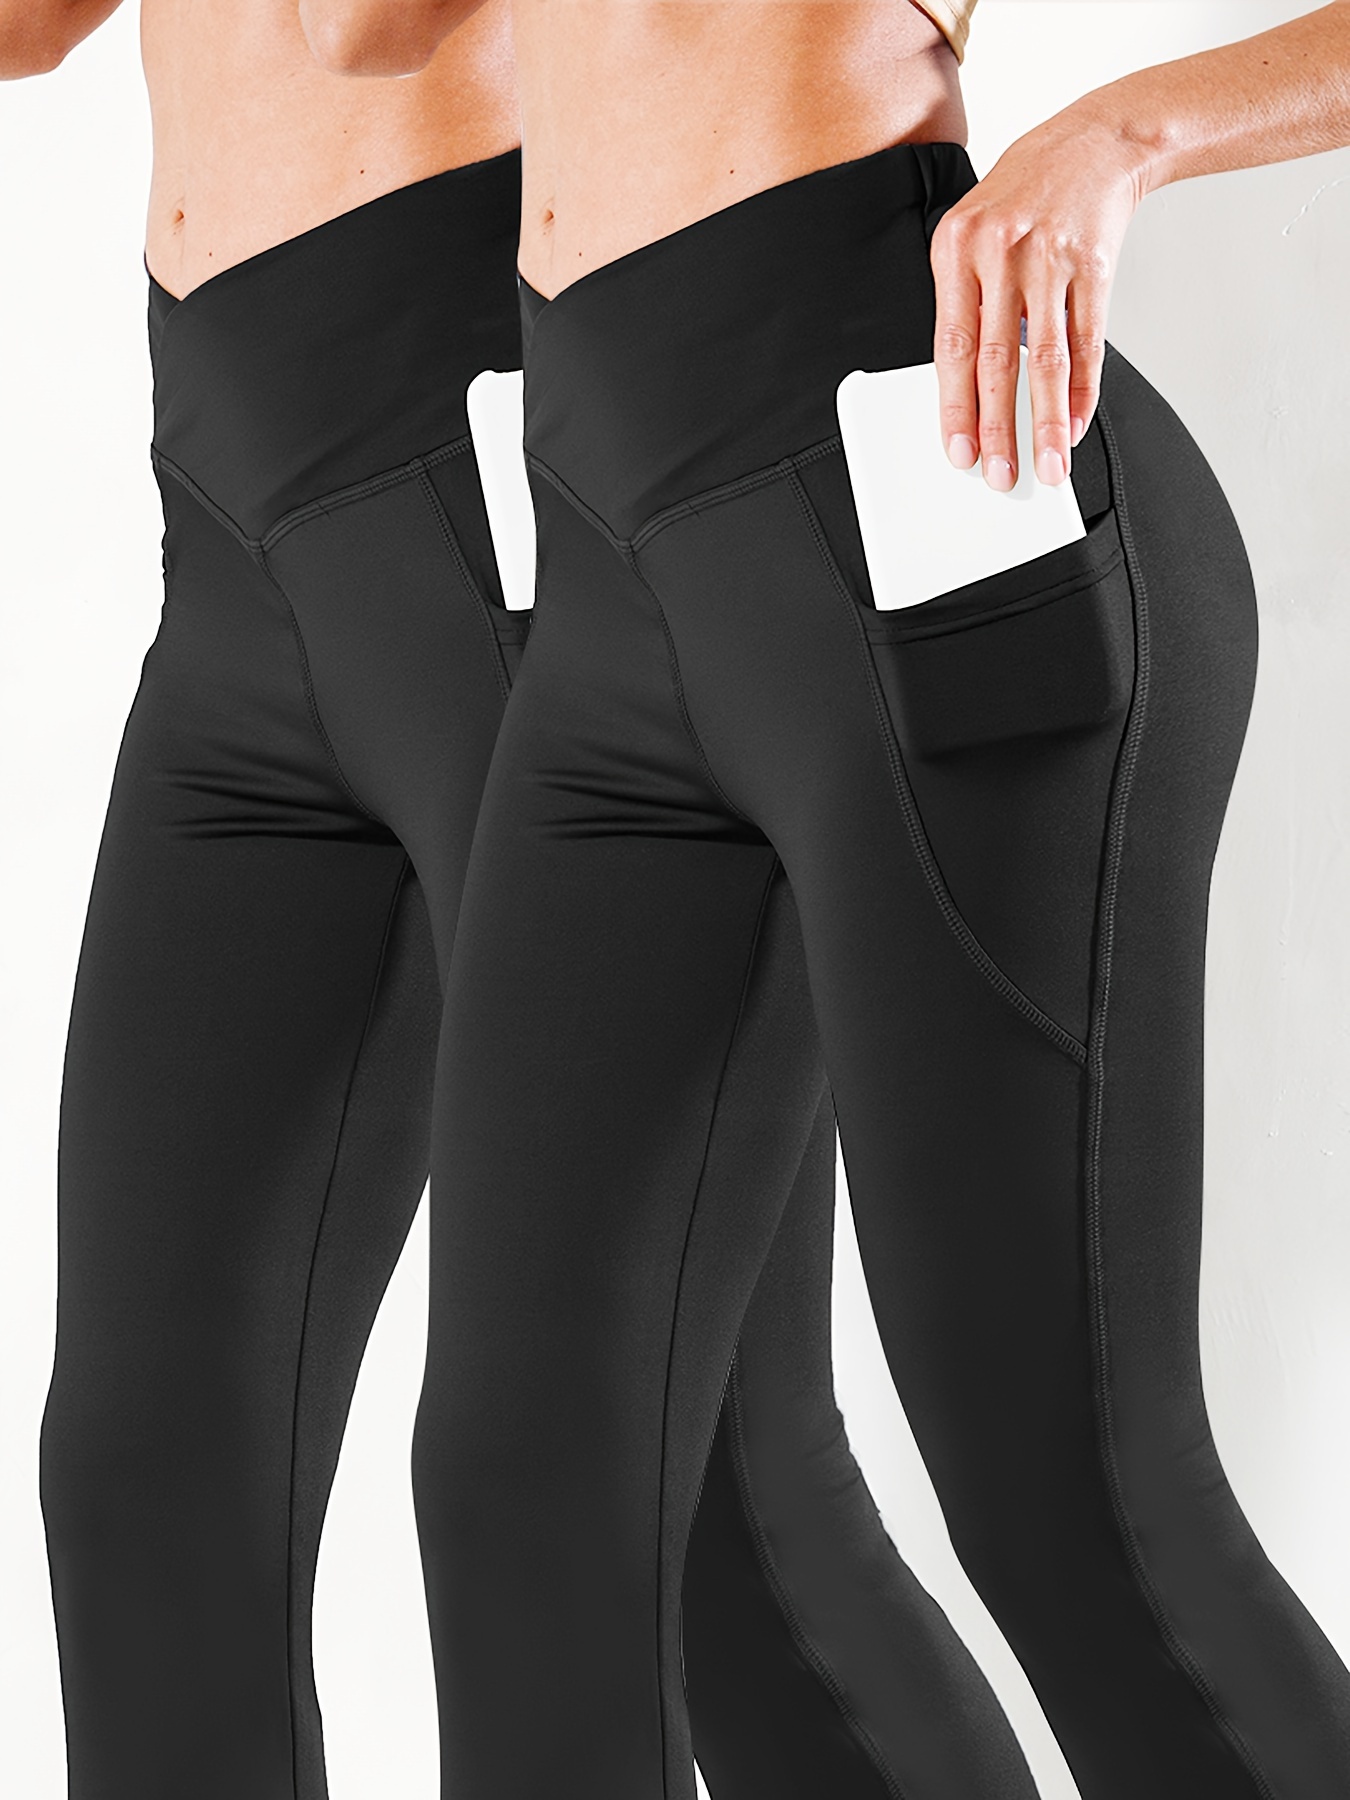 ODODOS cross Waist Wide Leg Flare Yoga Pants for Women Bell Bottom Sports  gym casual Workout Pants-31 Inseam, Burgundy, Medium